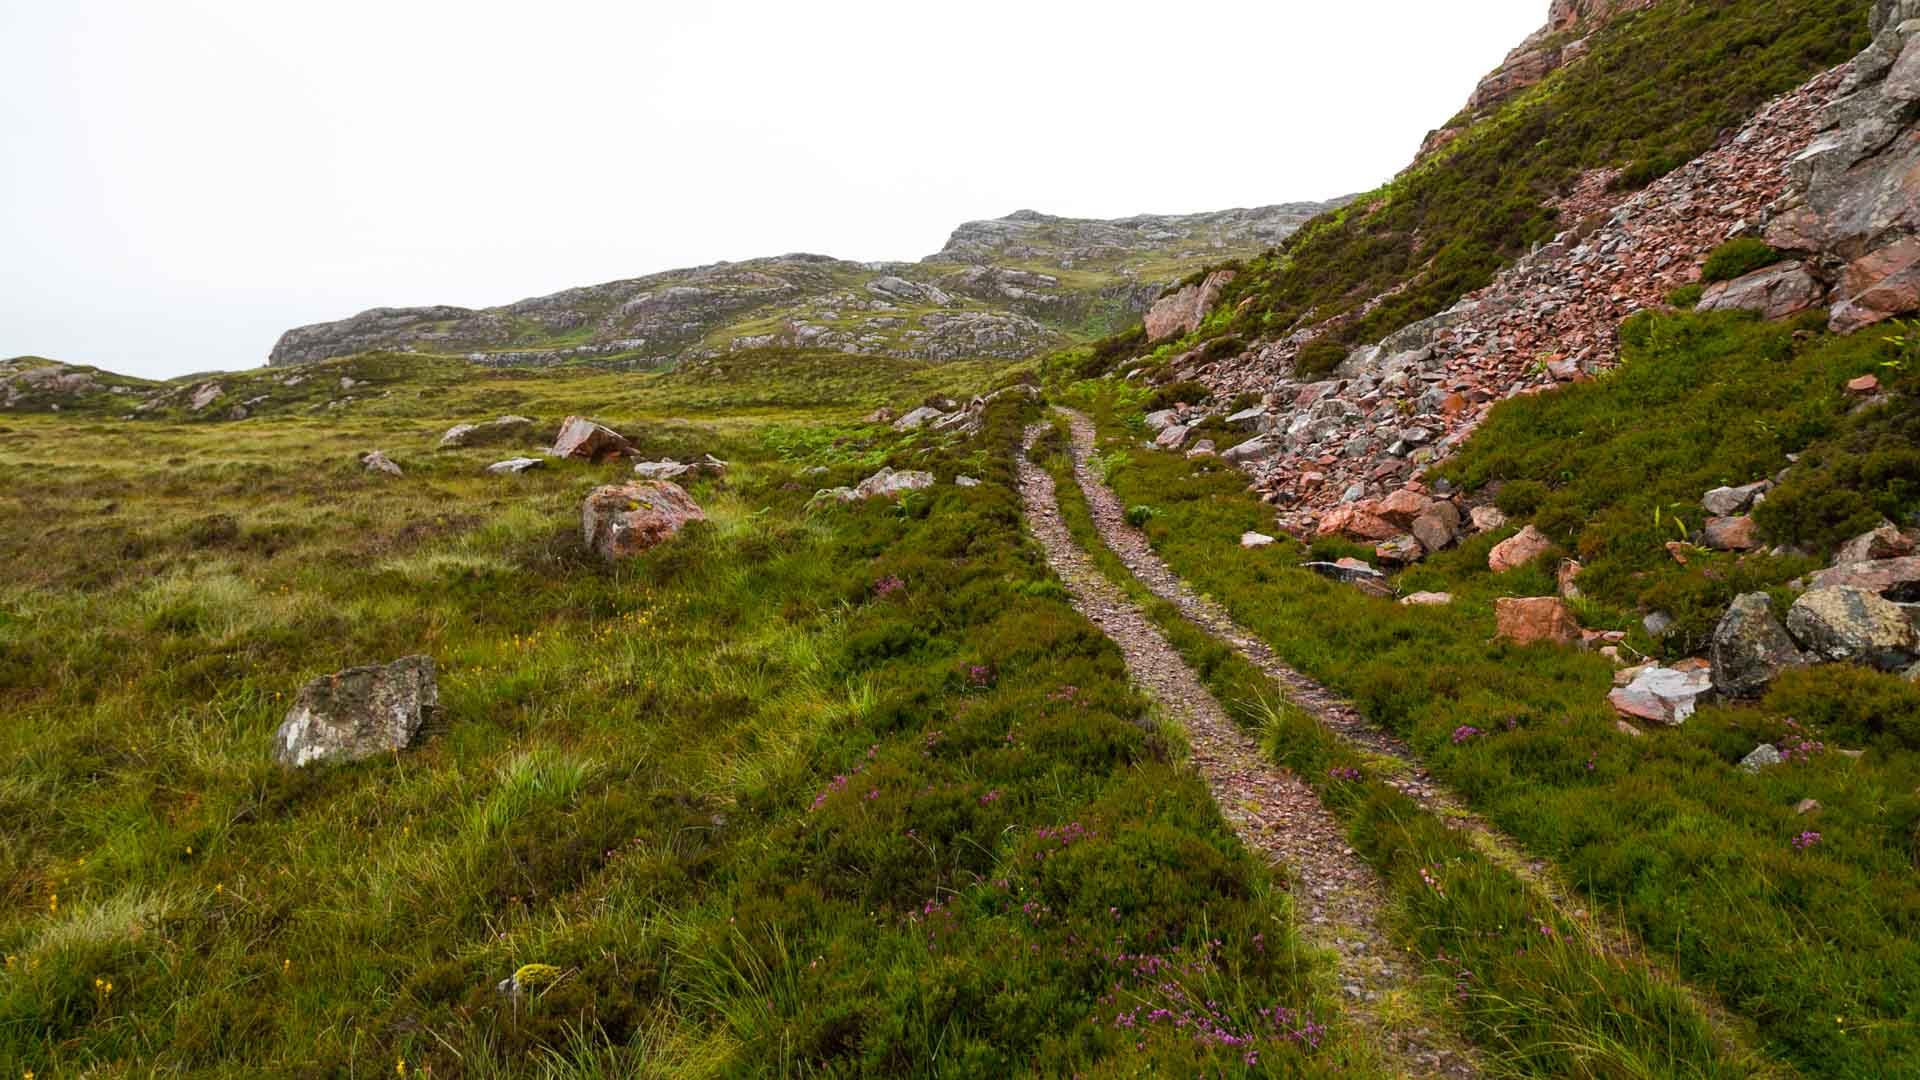 an unpaved tire-track road, uphill across moorish, rocky terrain